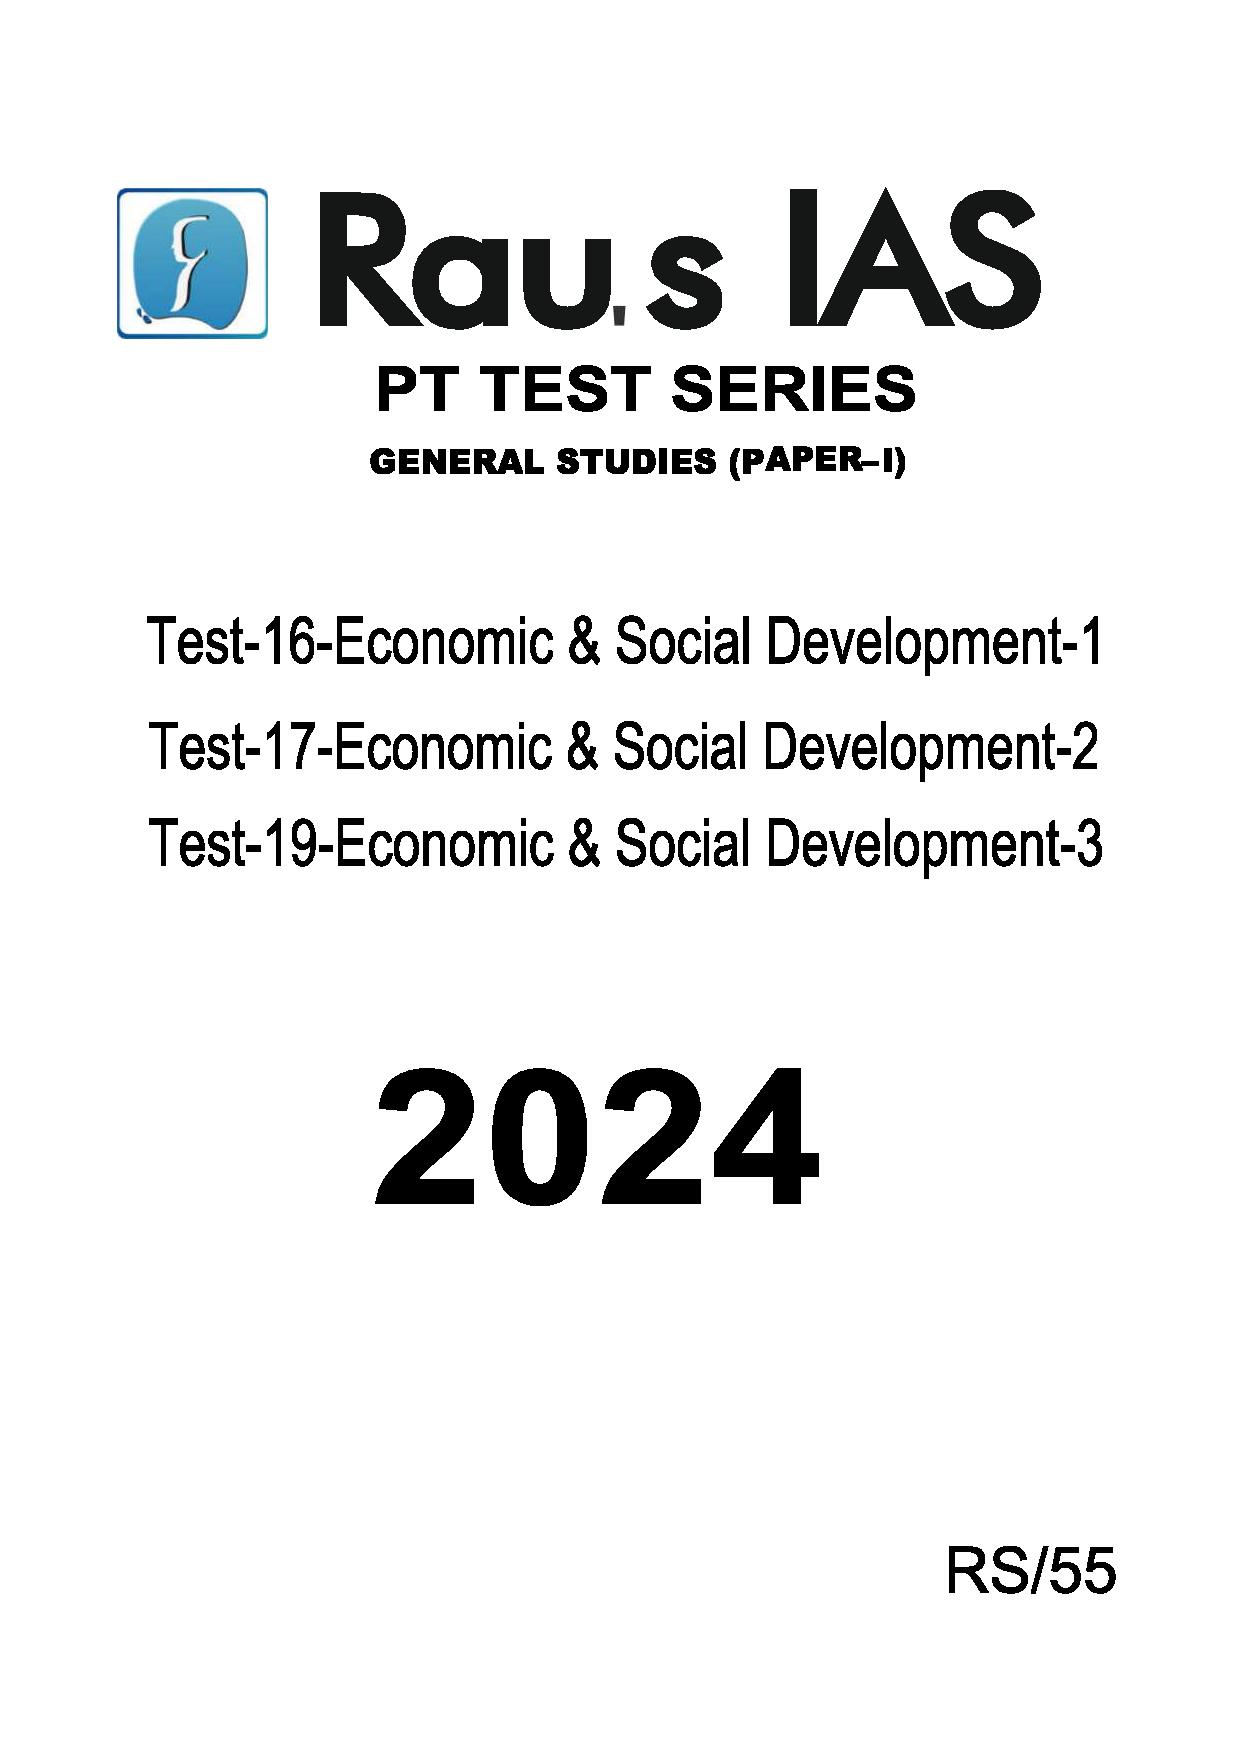 Manufacturer, Exporter, Importer, Supplier, Wholesaler, Retailer, Trader of RAU,S IAS PRELIMS TEST SERIES GENERAL STUDIES (PAPER-1) 2024 Test-16-Economic & Social Development-1-Test-17-Economic & Social Development-2-Test-19-Economic & Social Development-3 in New Delhi, Delhi, India.